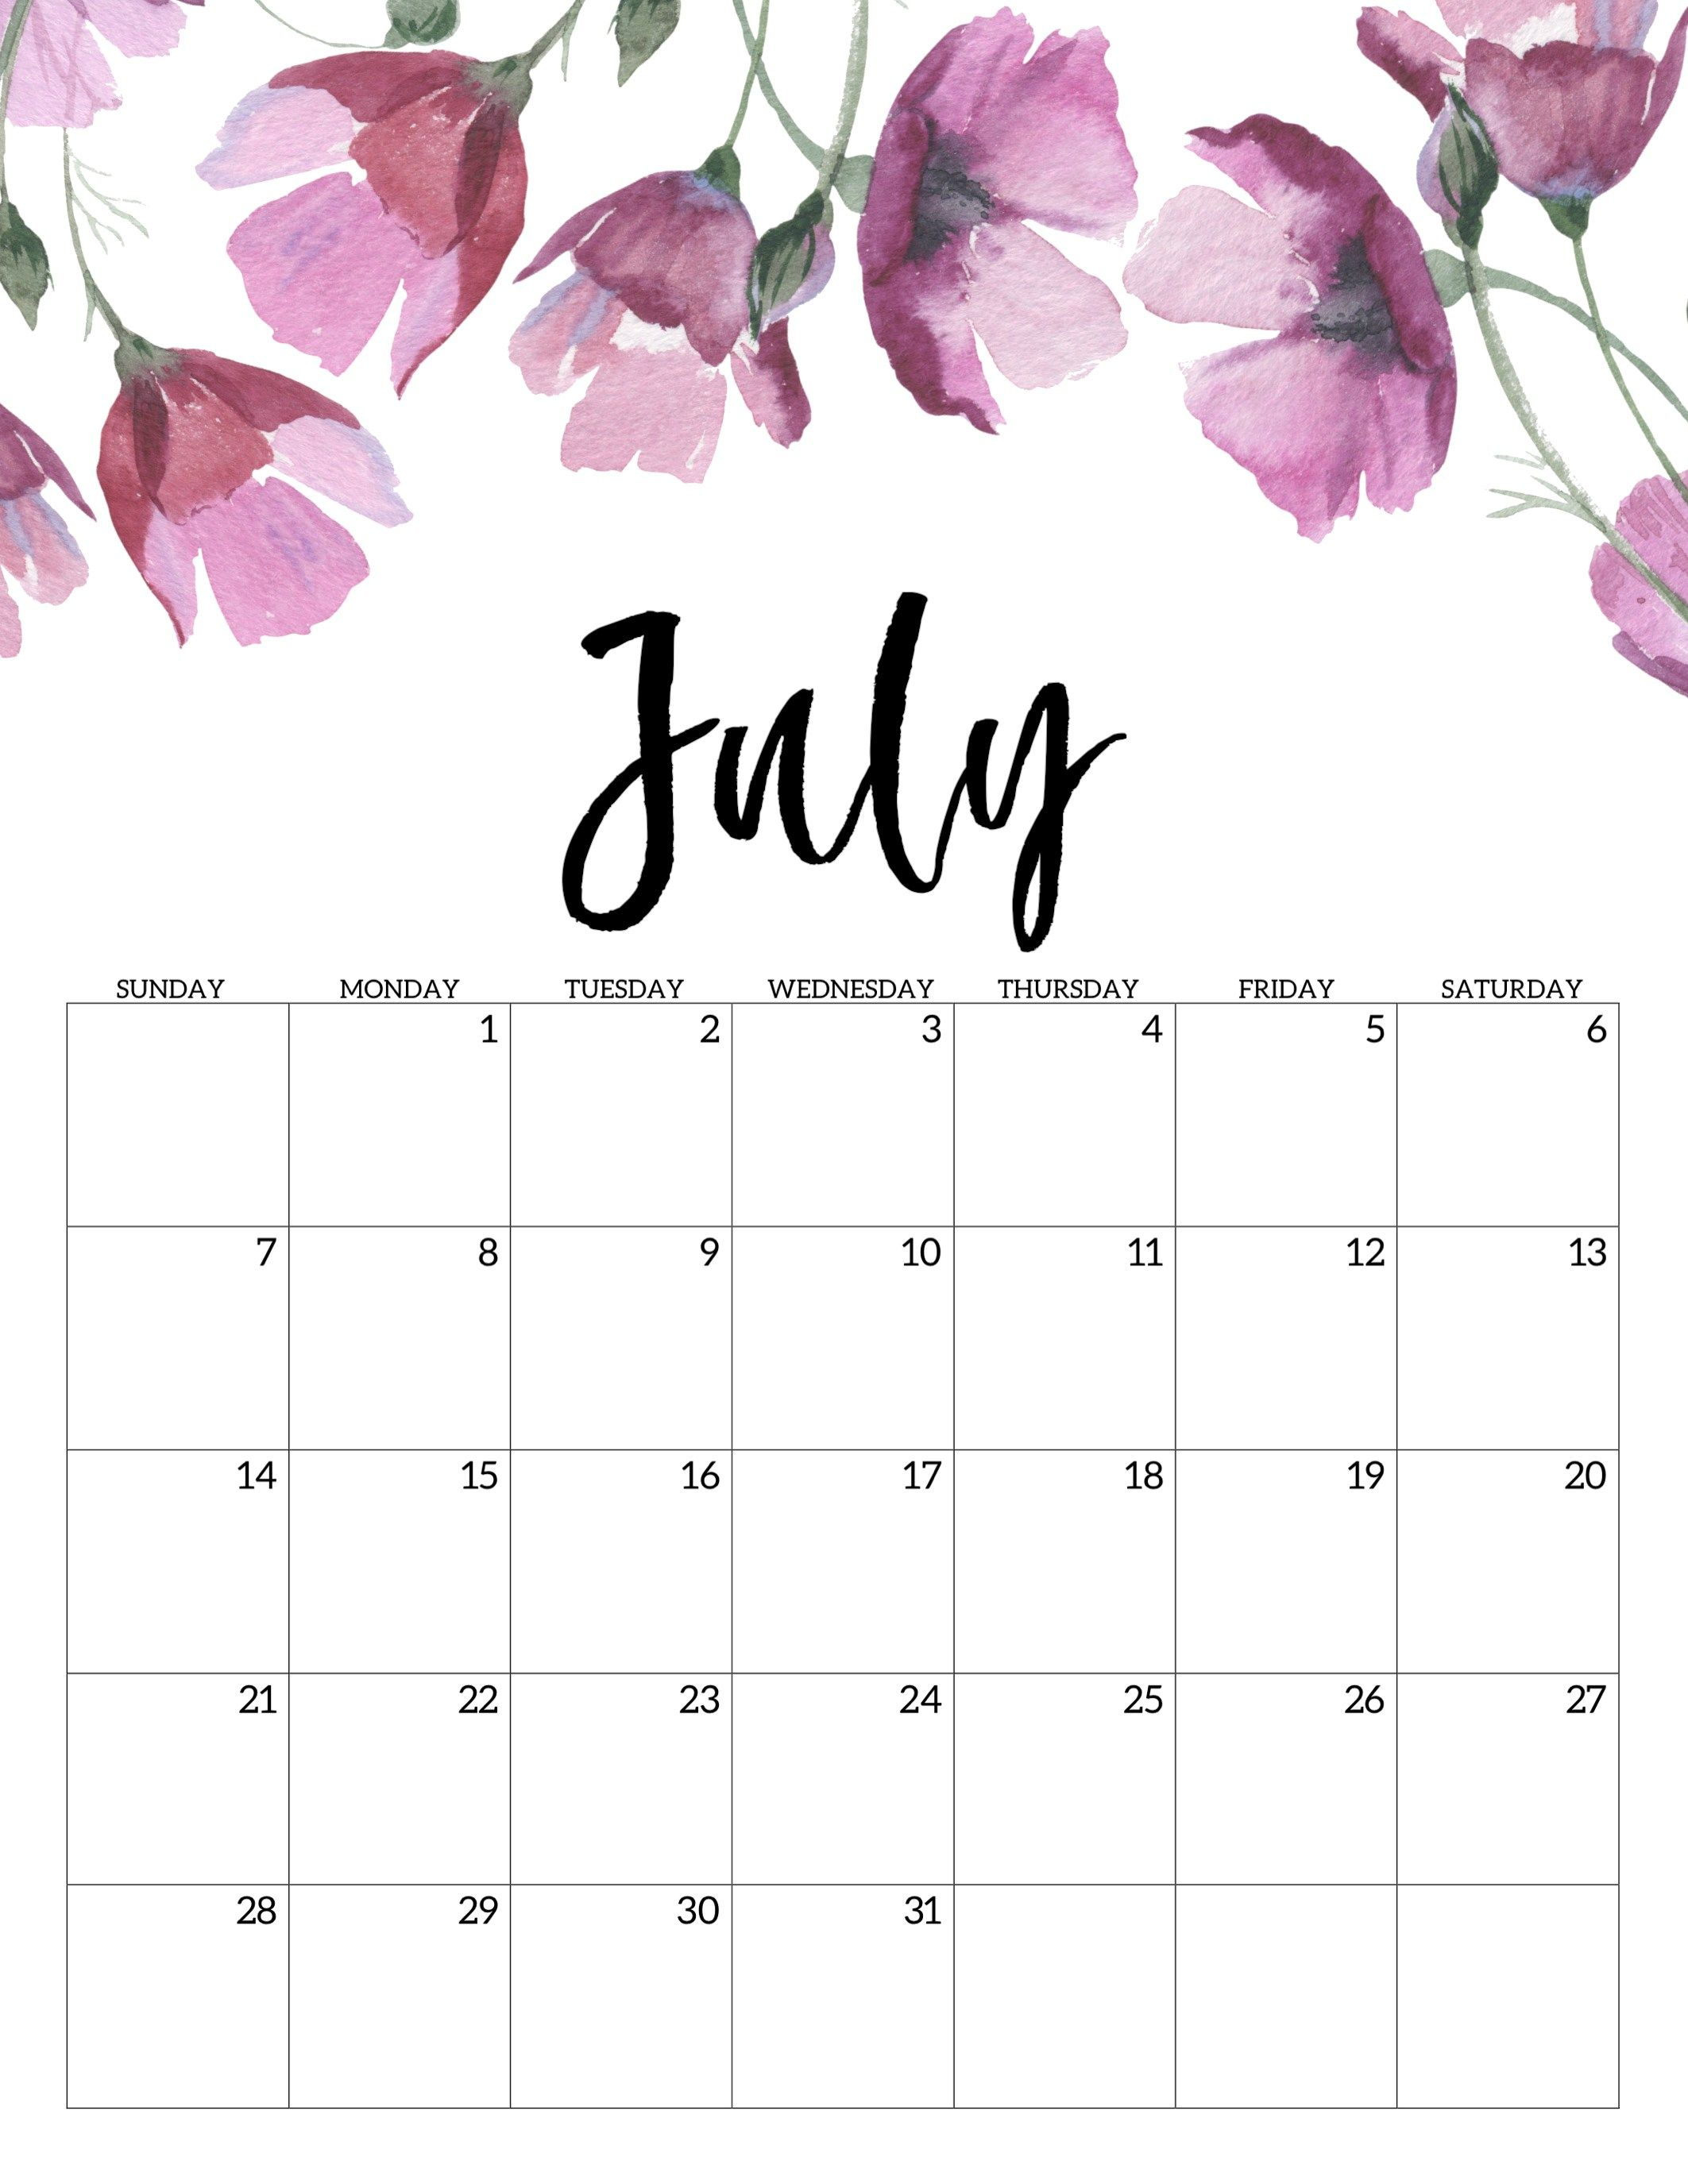 Free Printable Calendar 2019 - Floral | Печатные Календари